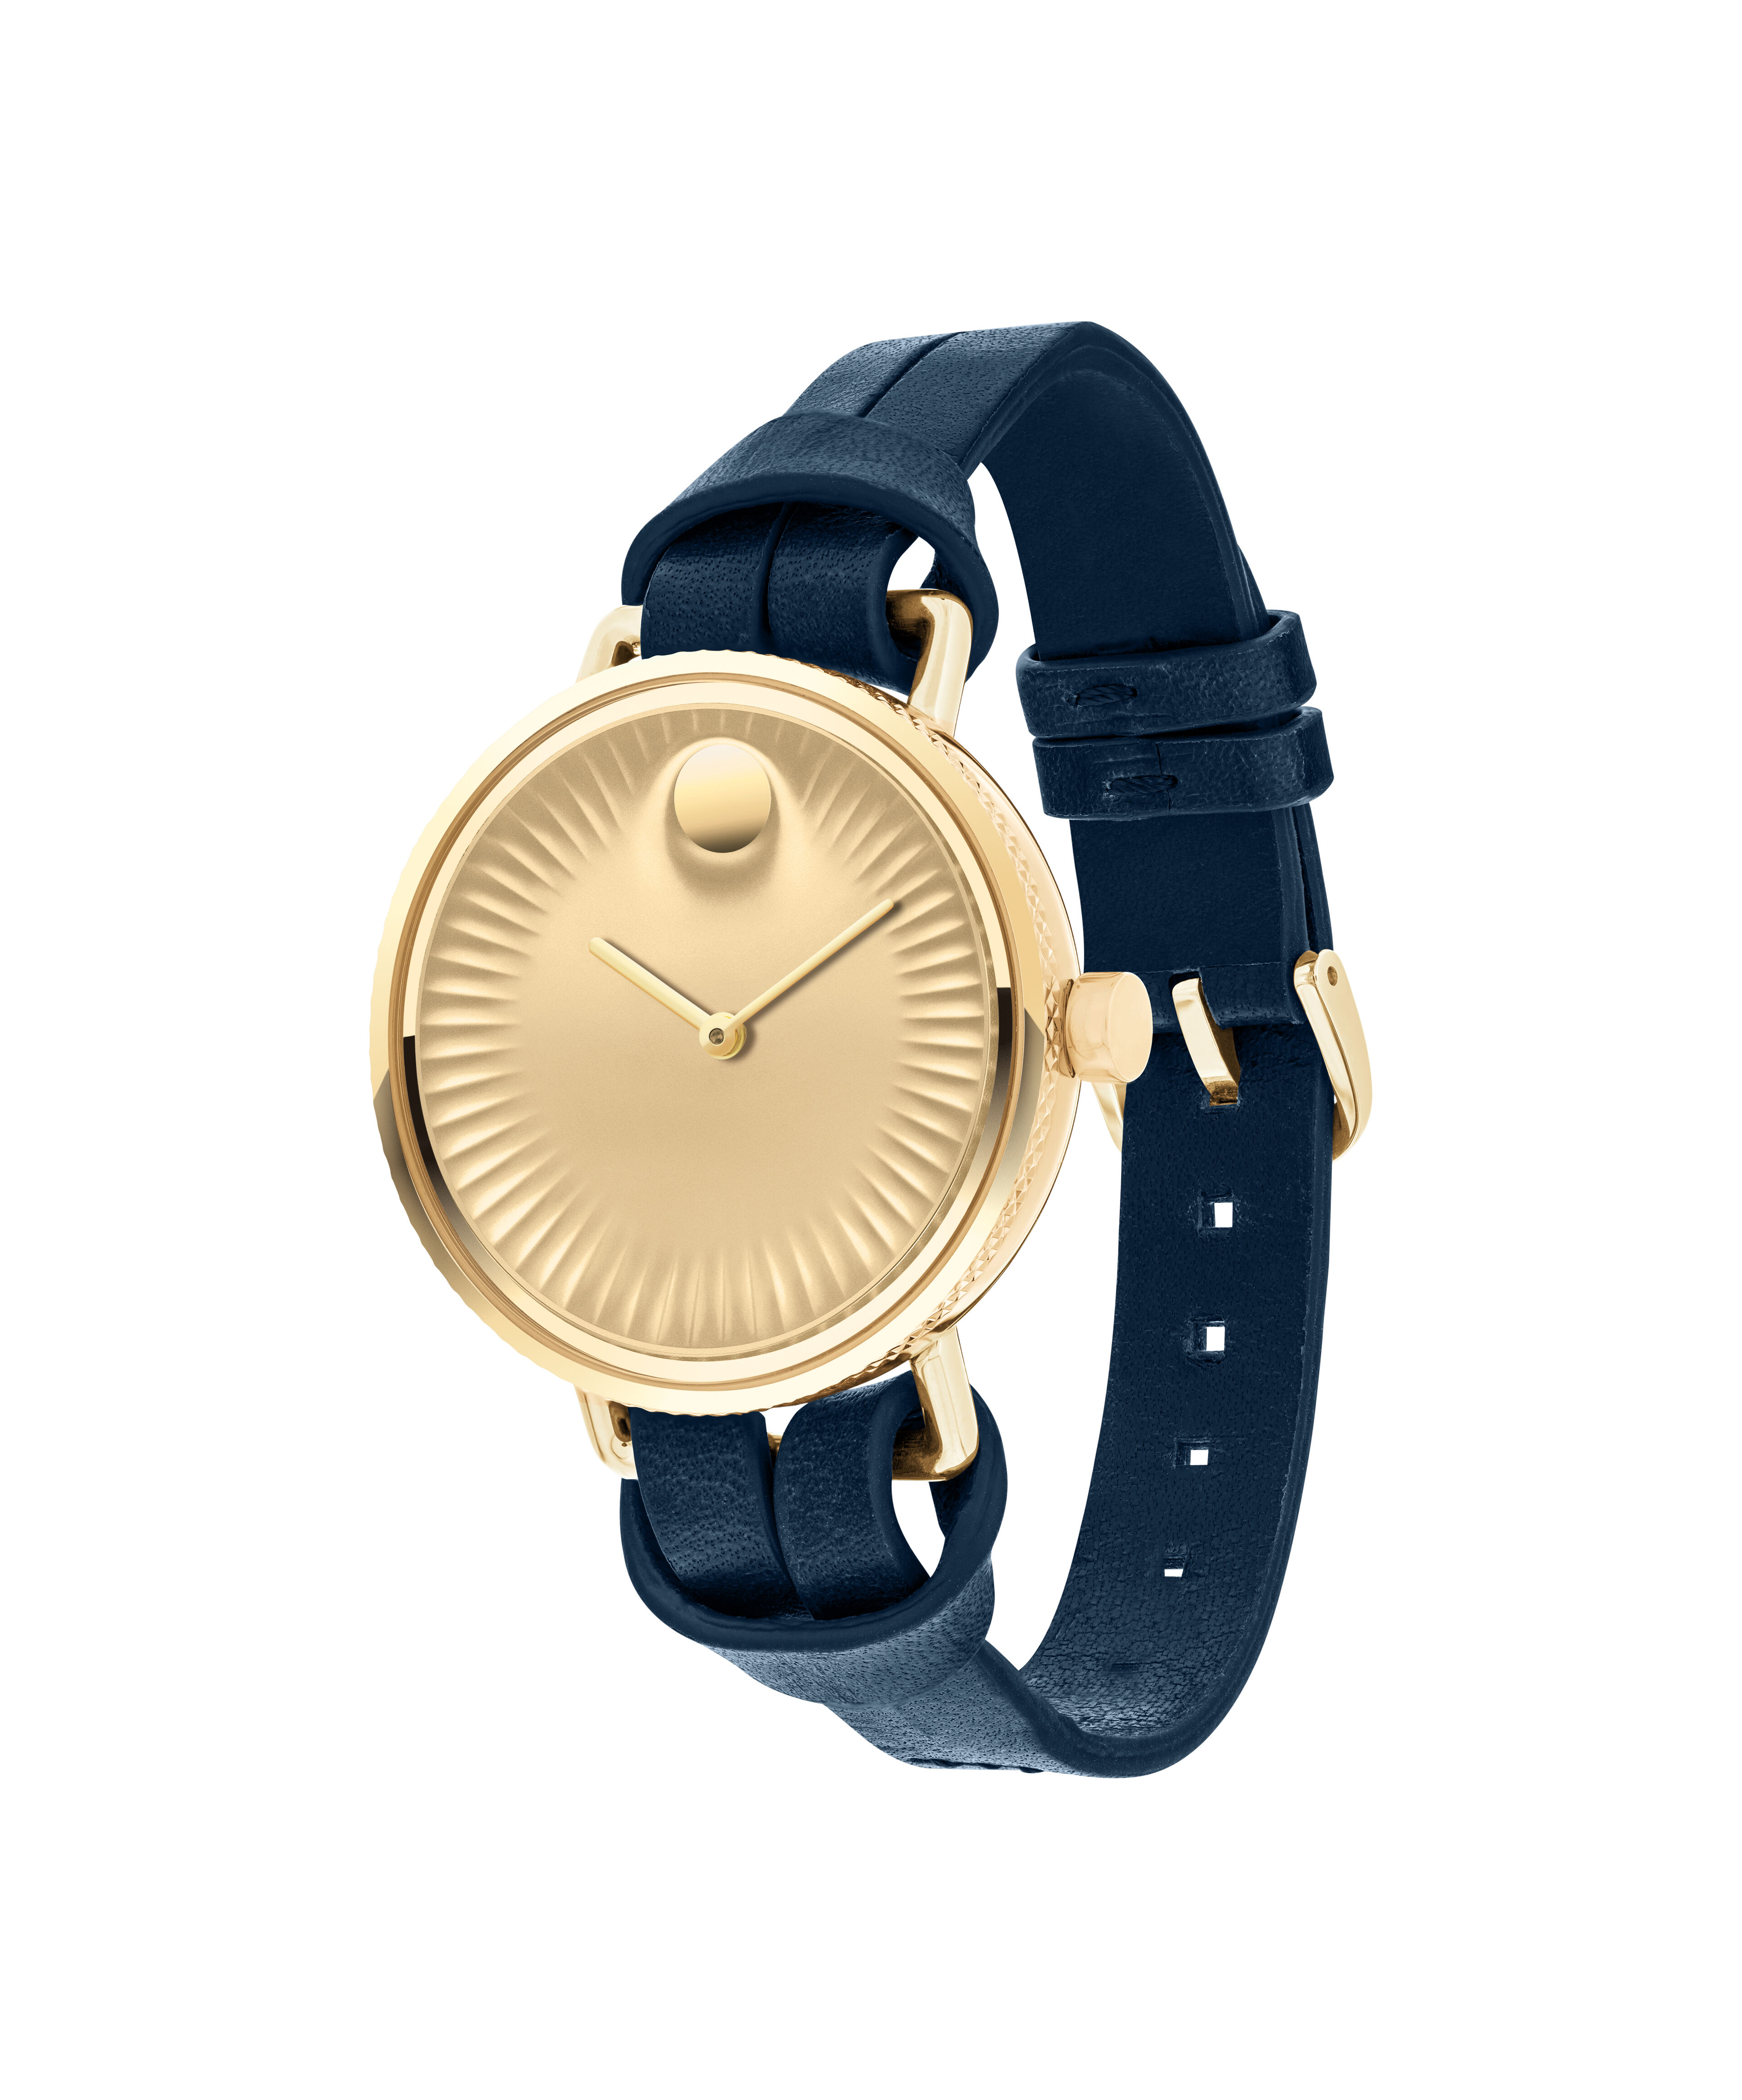 Replica Breitling Watch Price